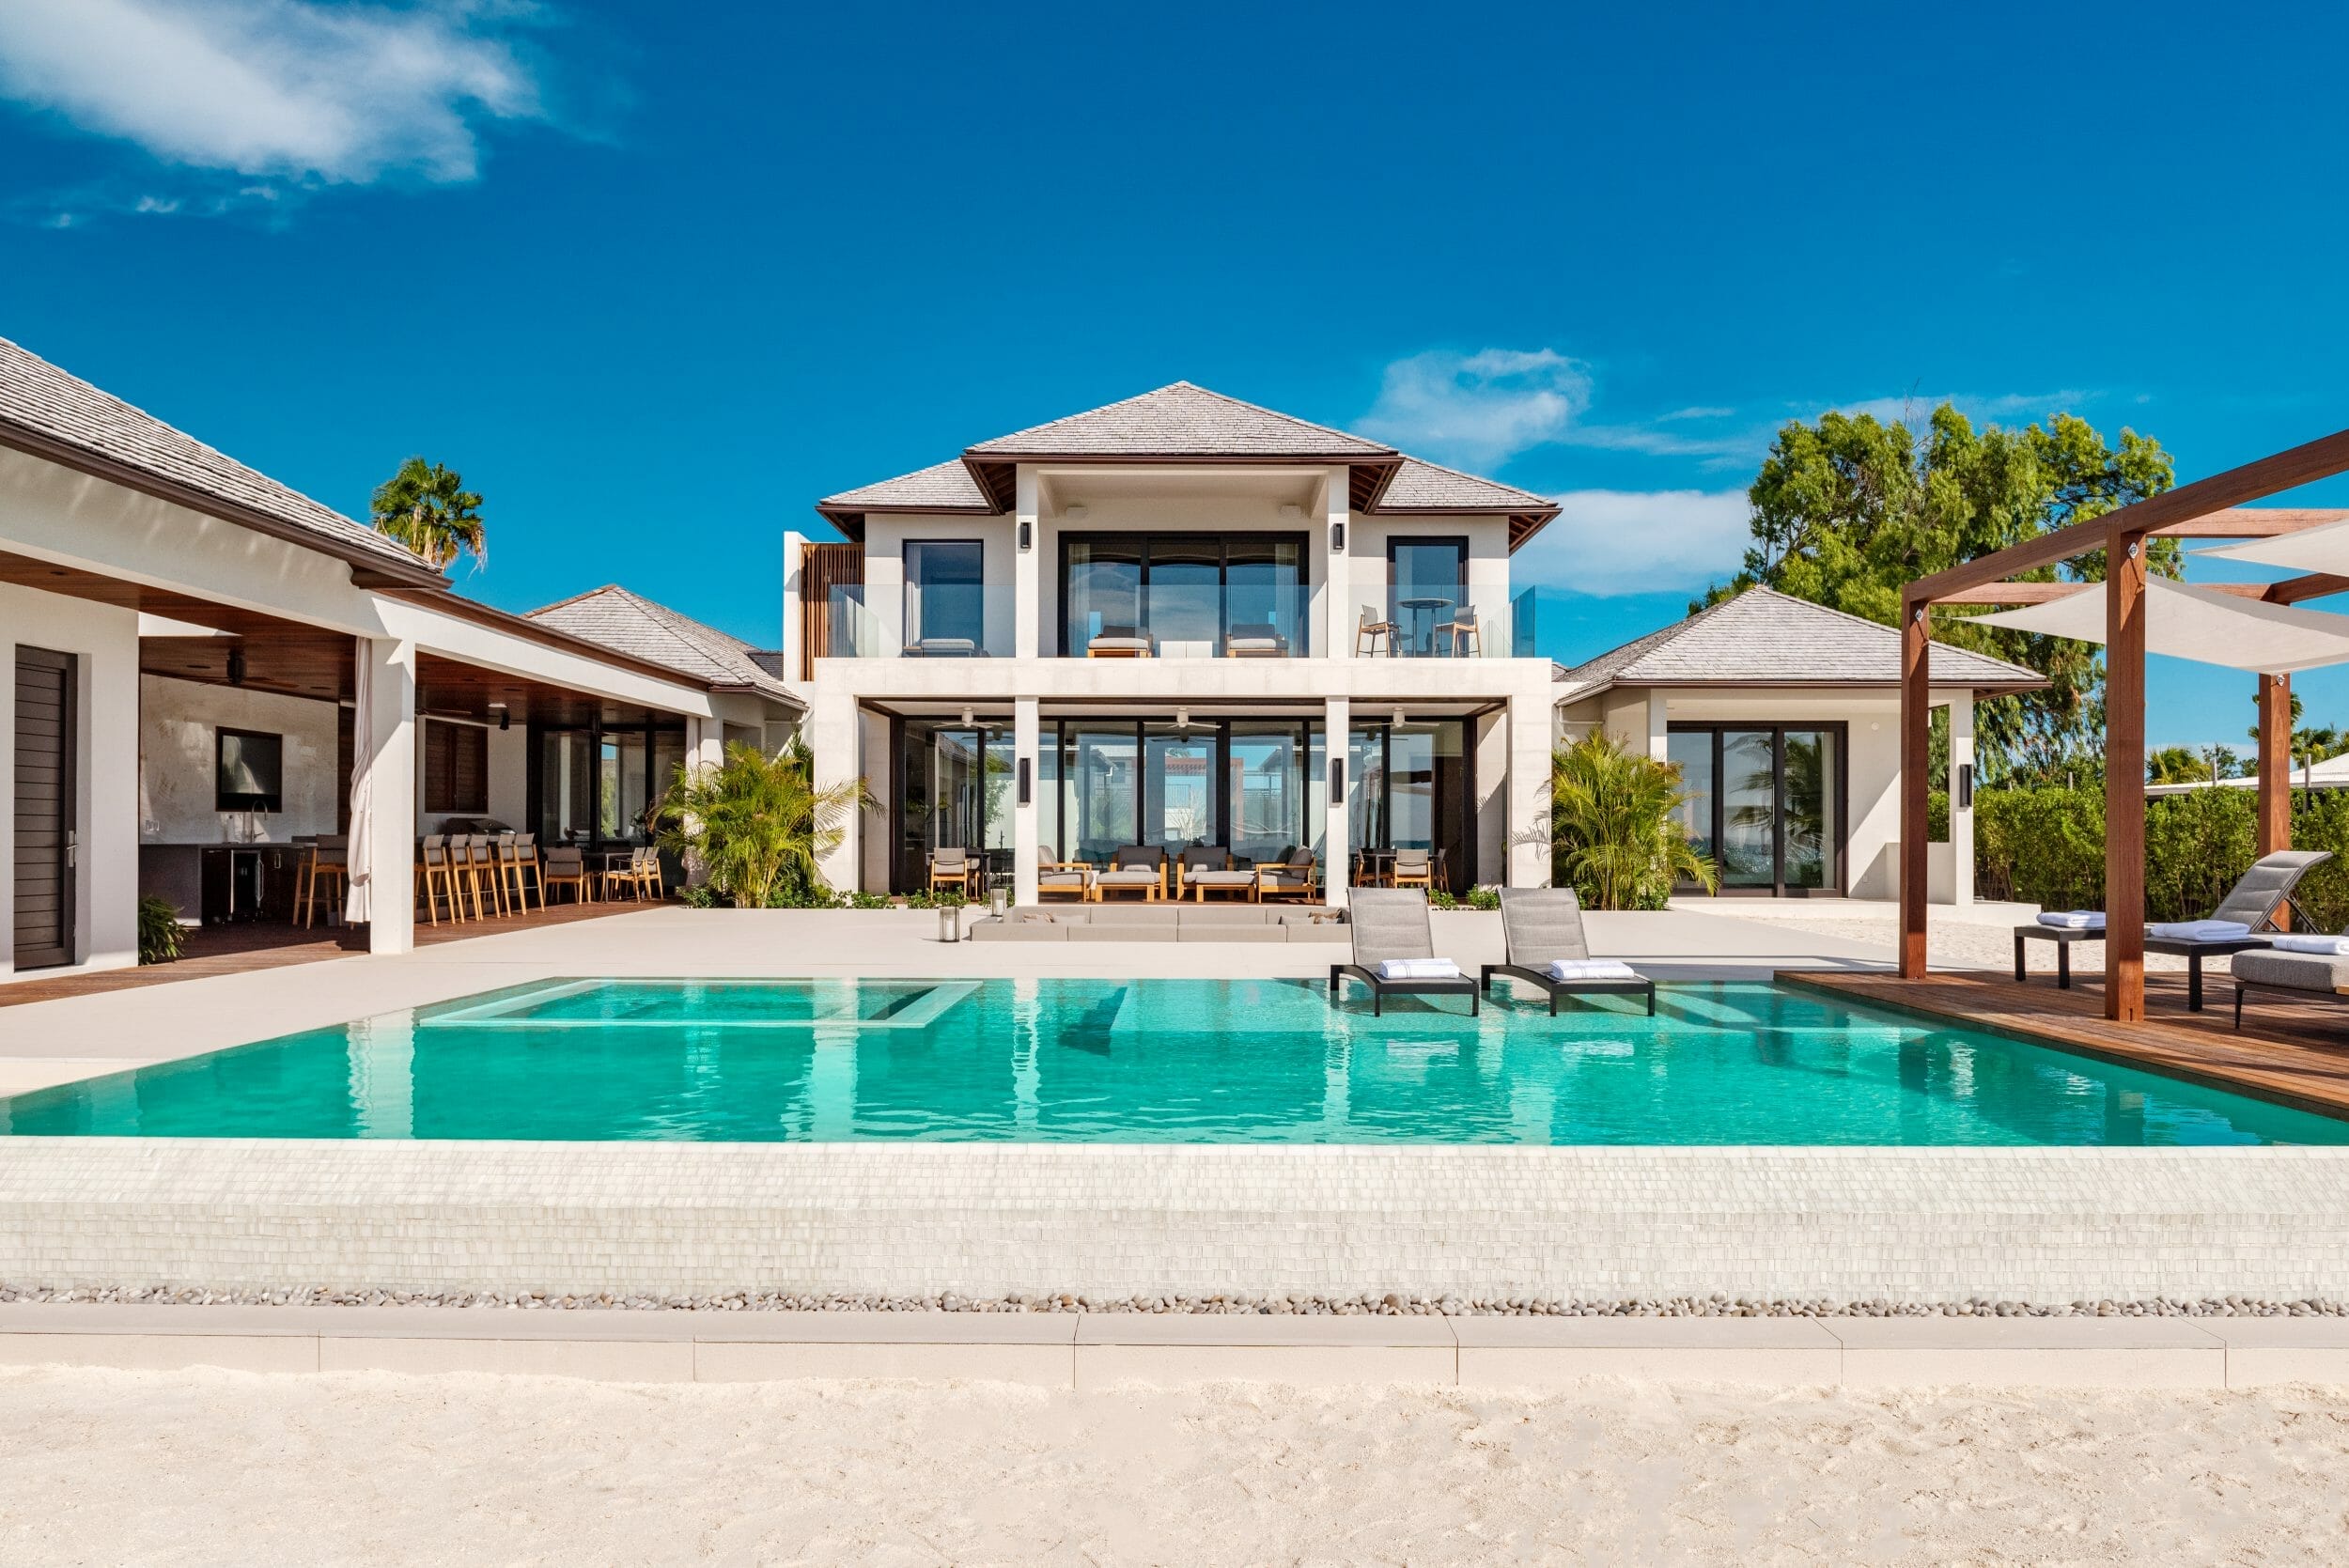 Handpicked villa rentals in the Turks and Caicos